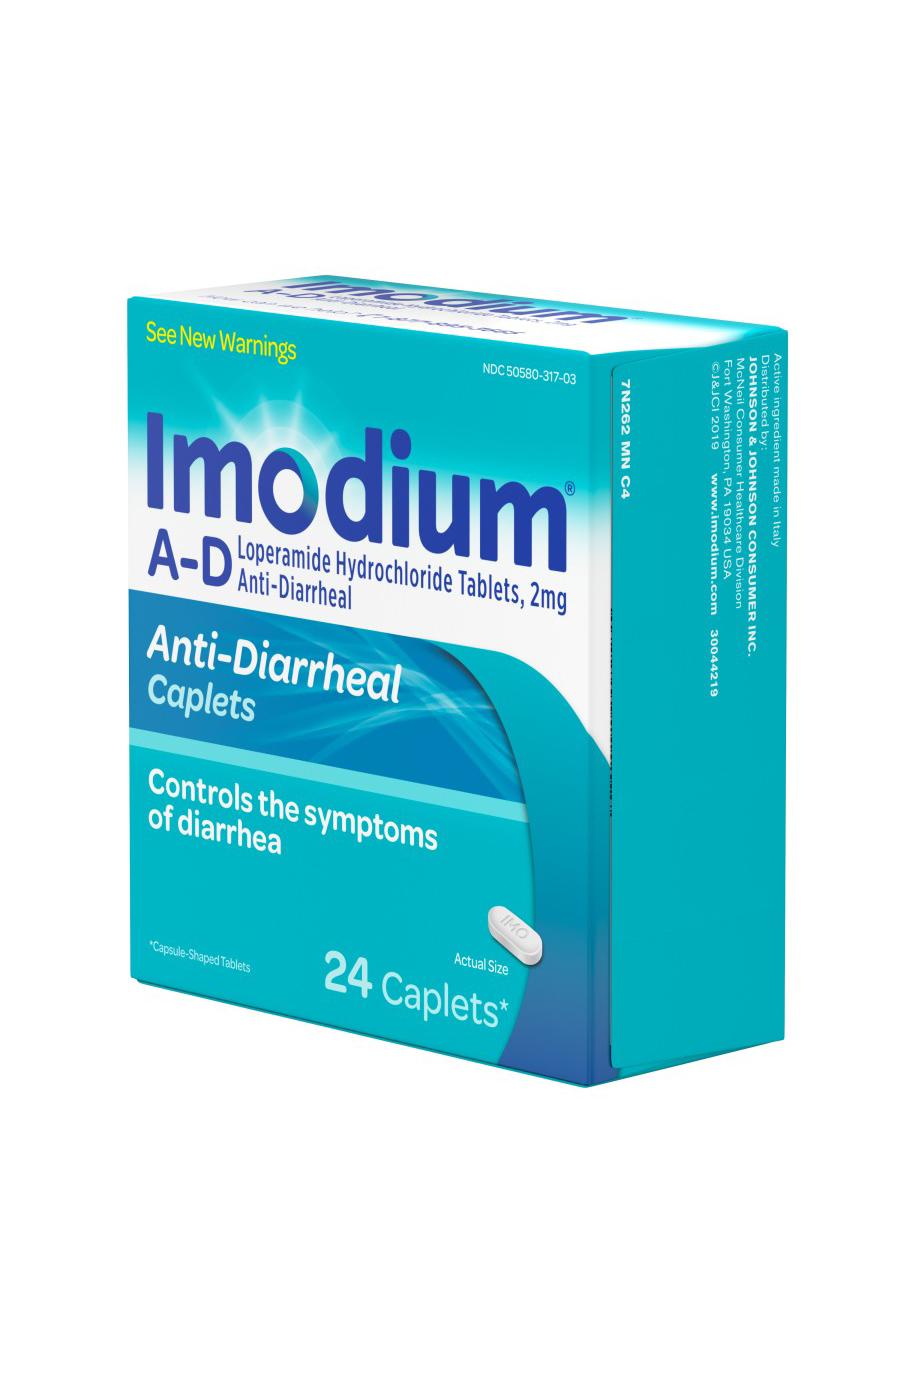 Imodium A-D Anti-Diarrheal Caplets; image 5 of 5